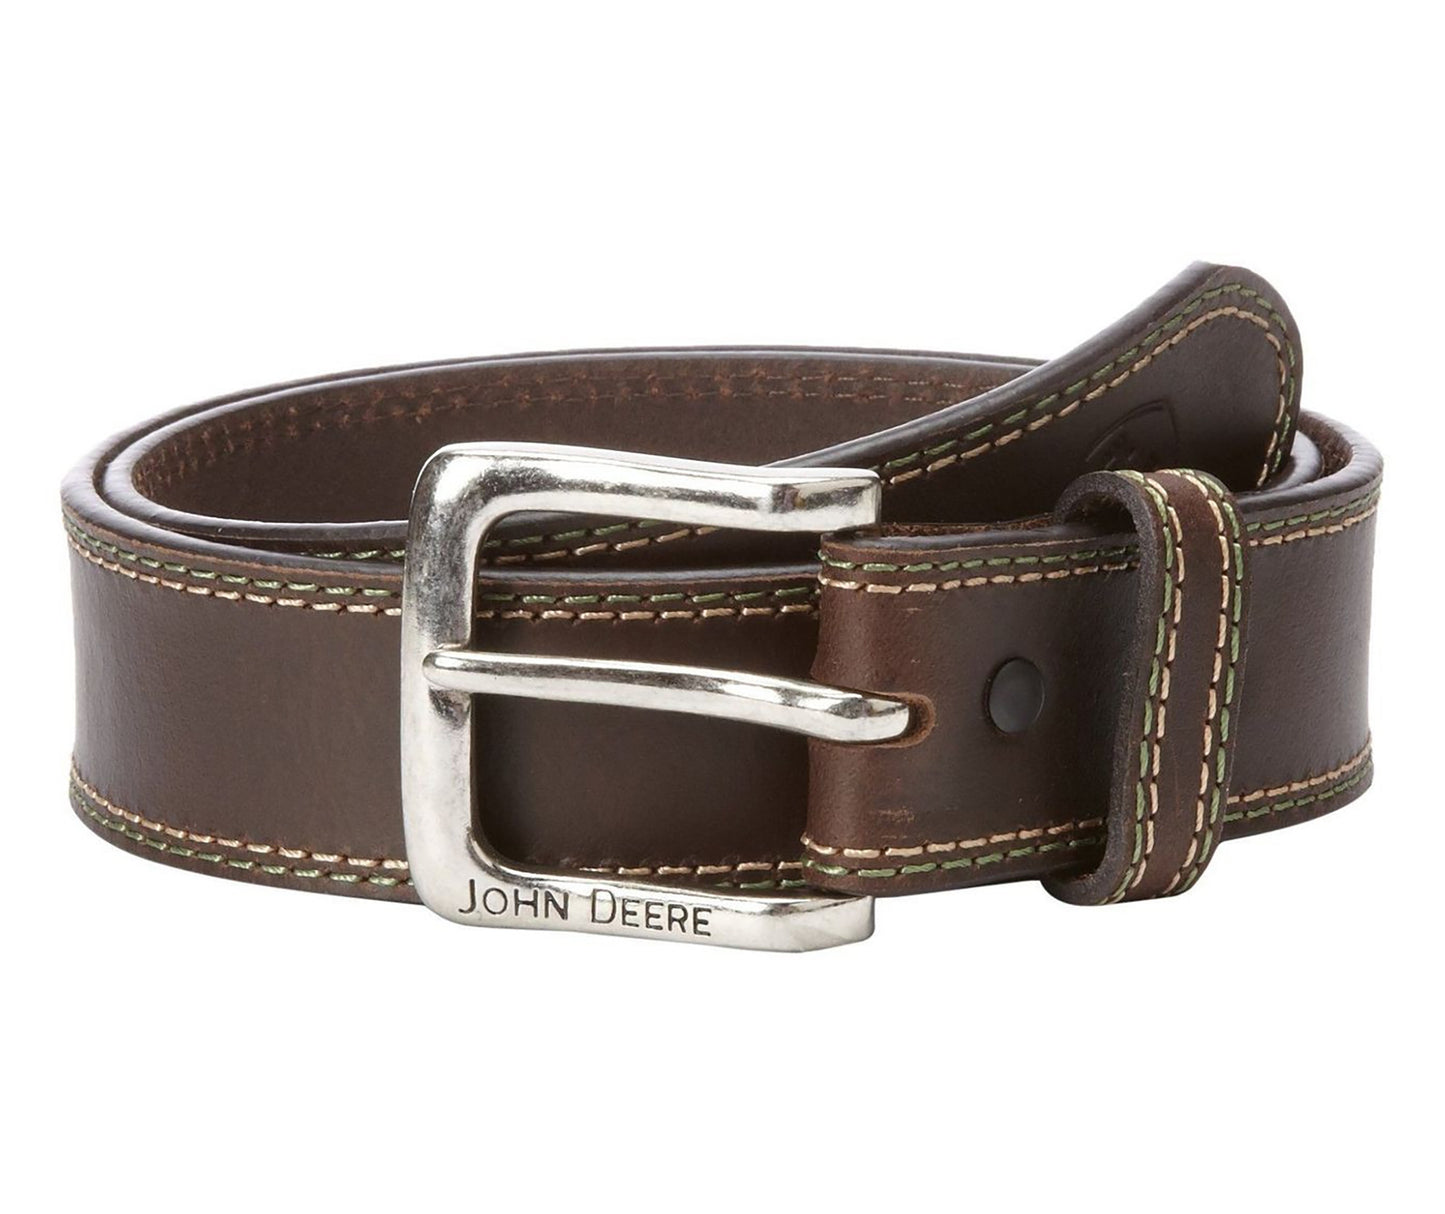 John Deere Buffalo Bridle Leather Belt - Brown - 4509500-200